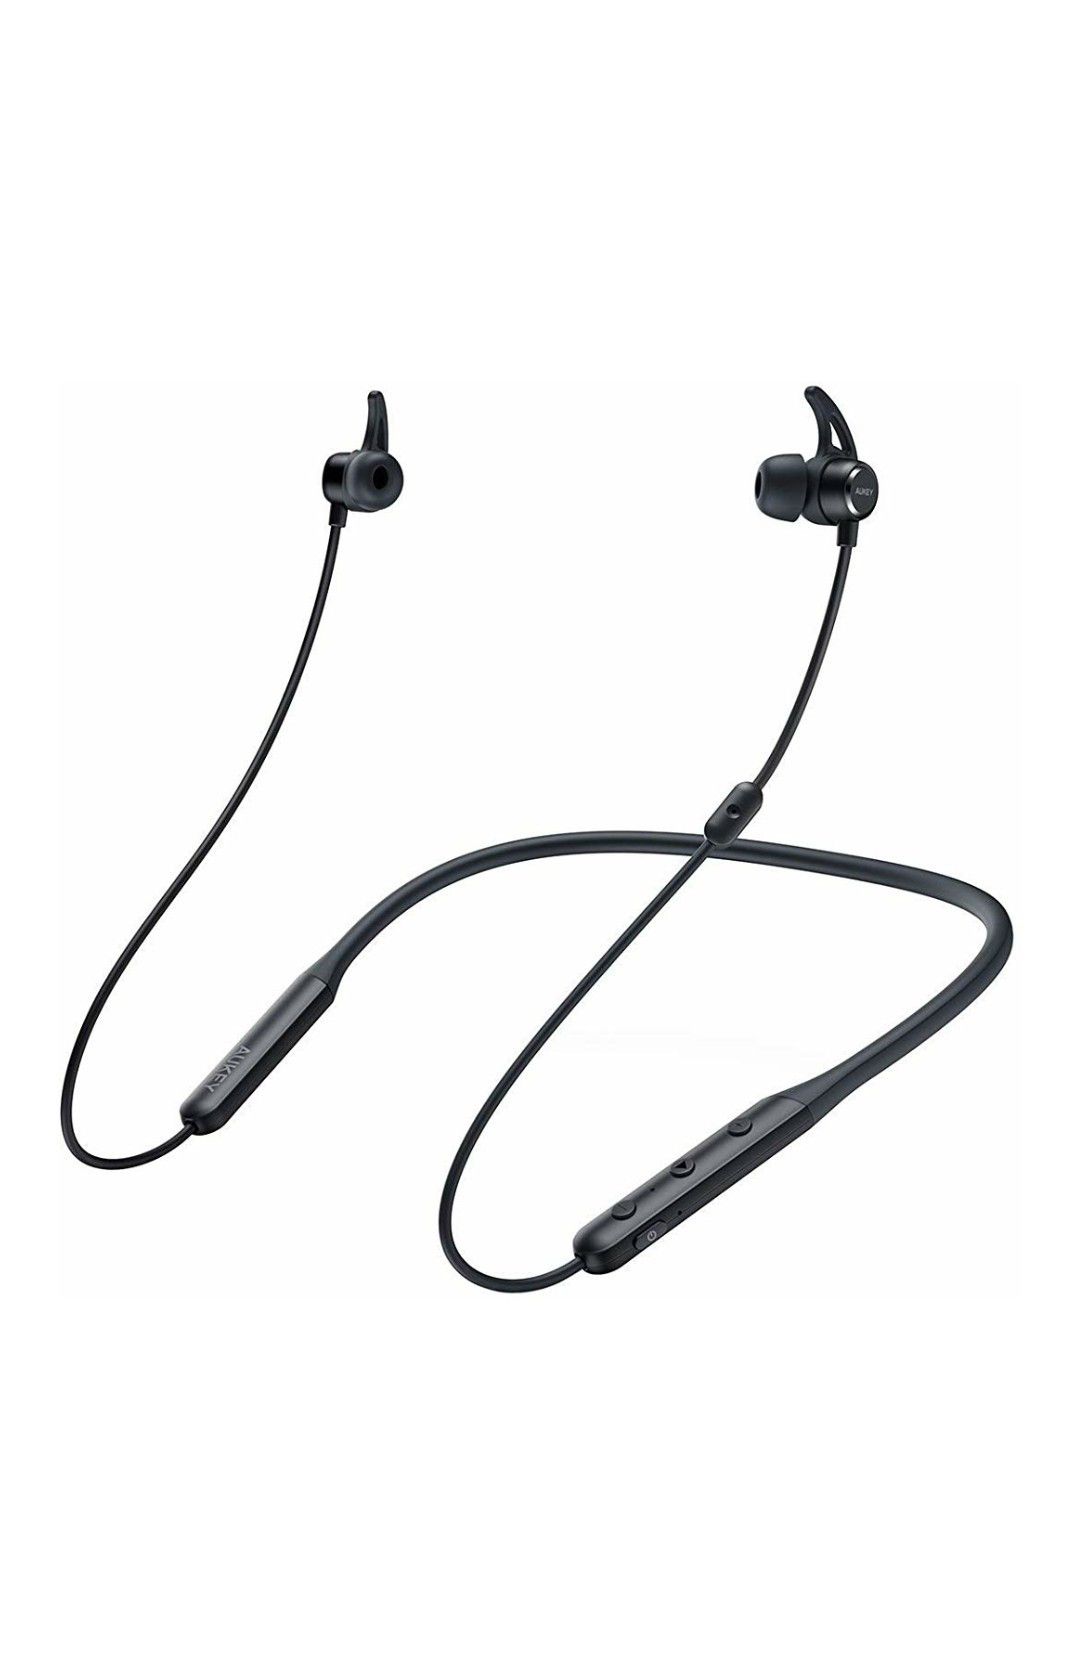 (W201) AUKEY Bluetooth 5 Headphones, Neckband Headset with aptX HD, IPX5 Water Resistance, Skin-Friendly Flexible Neckband